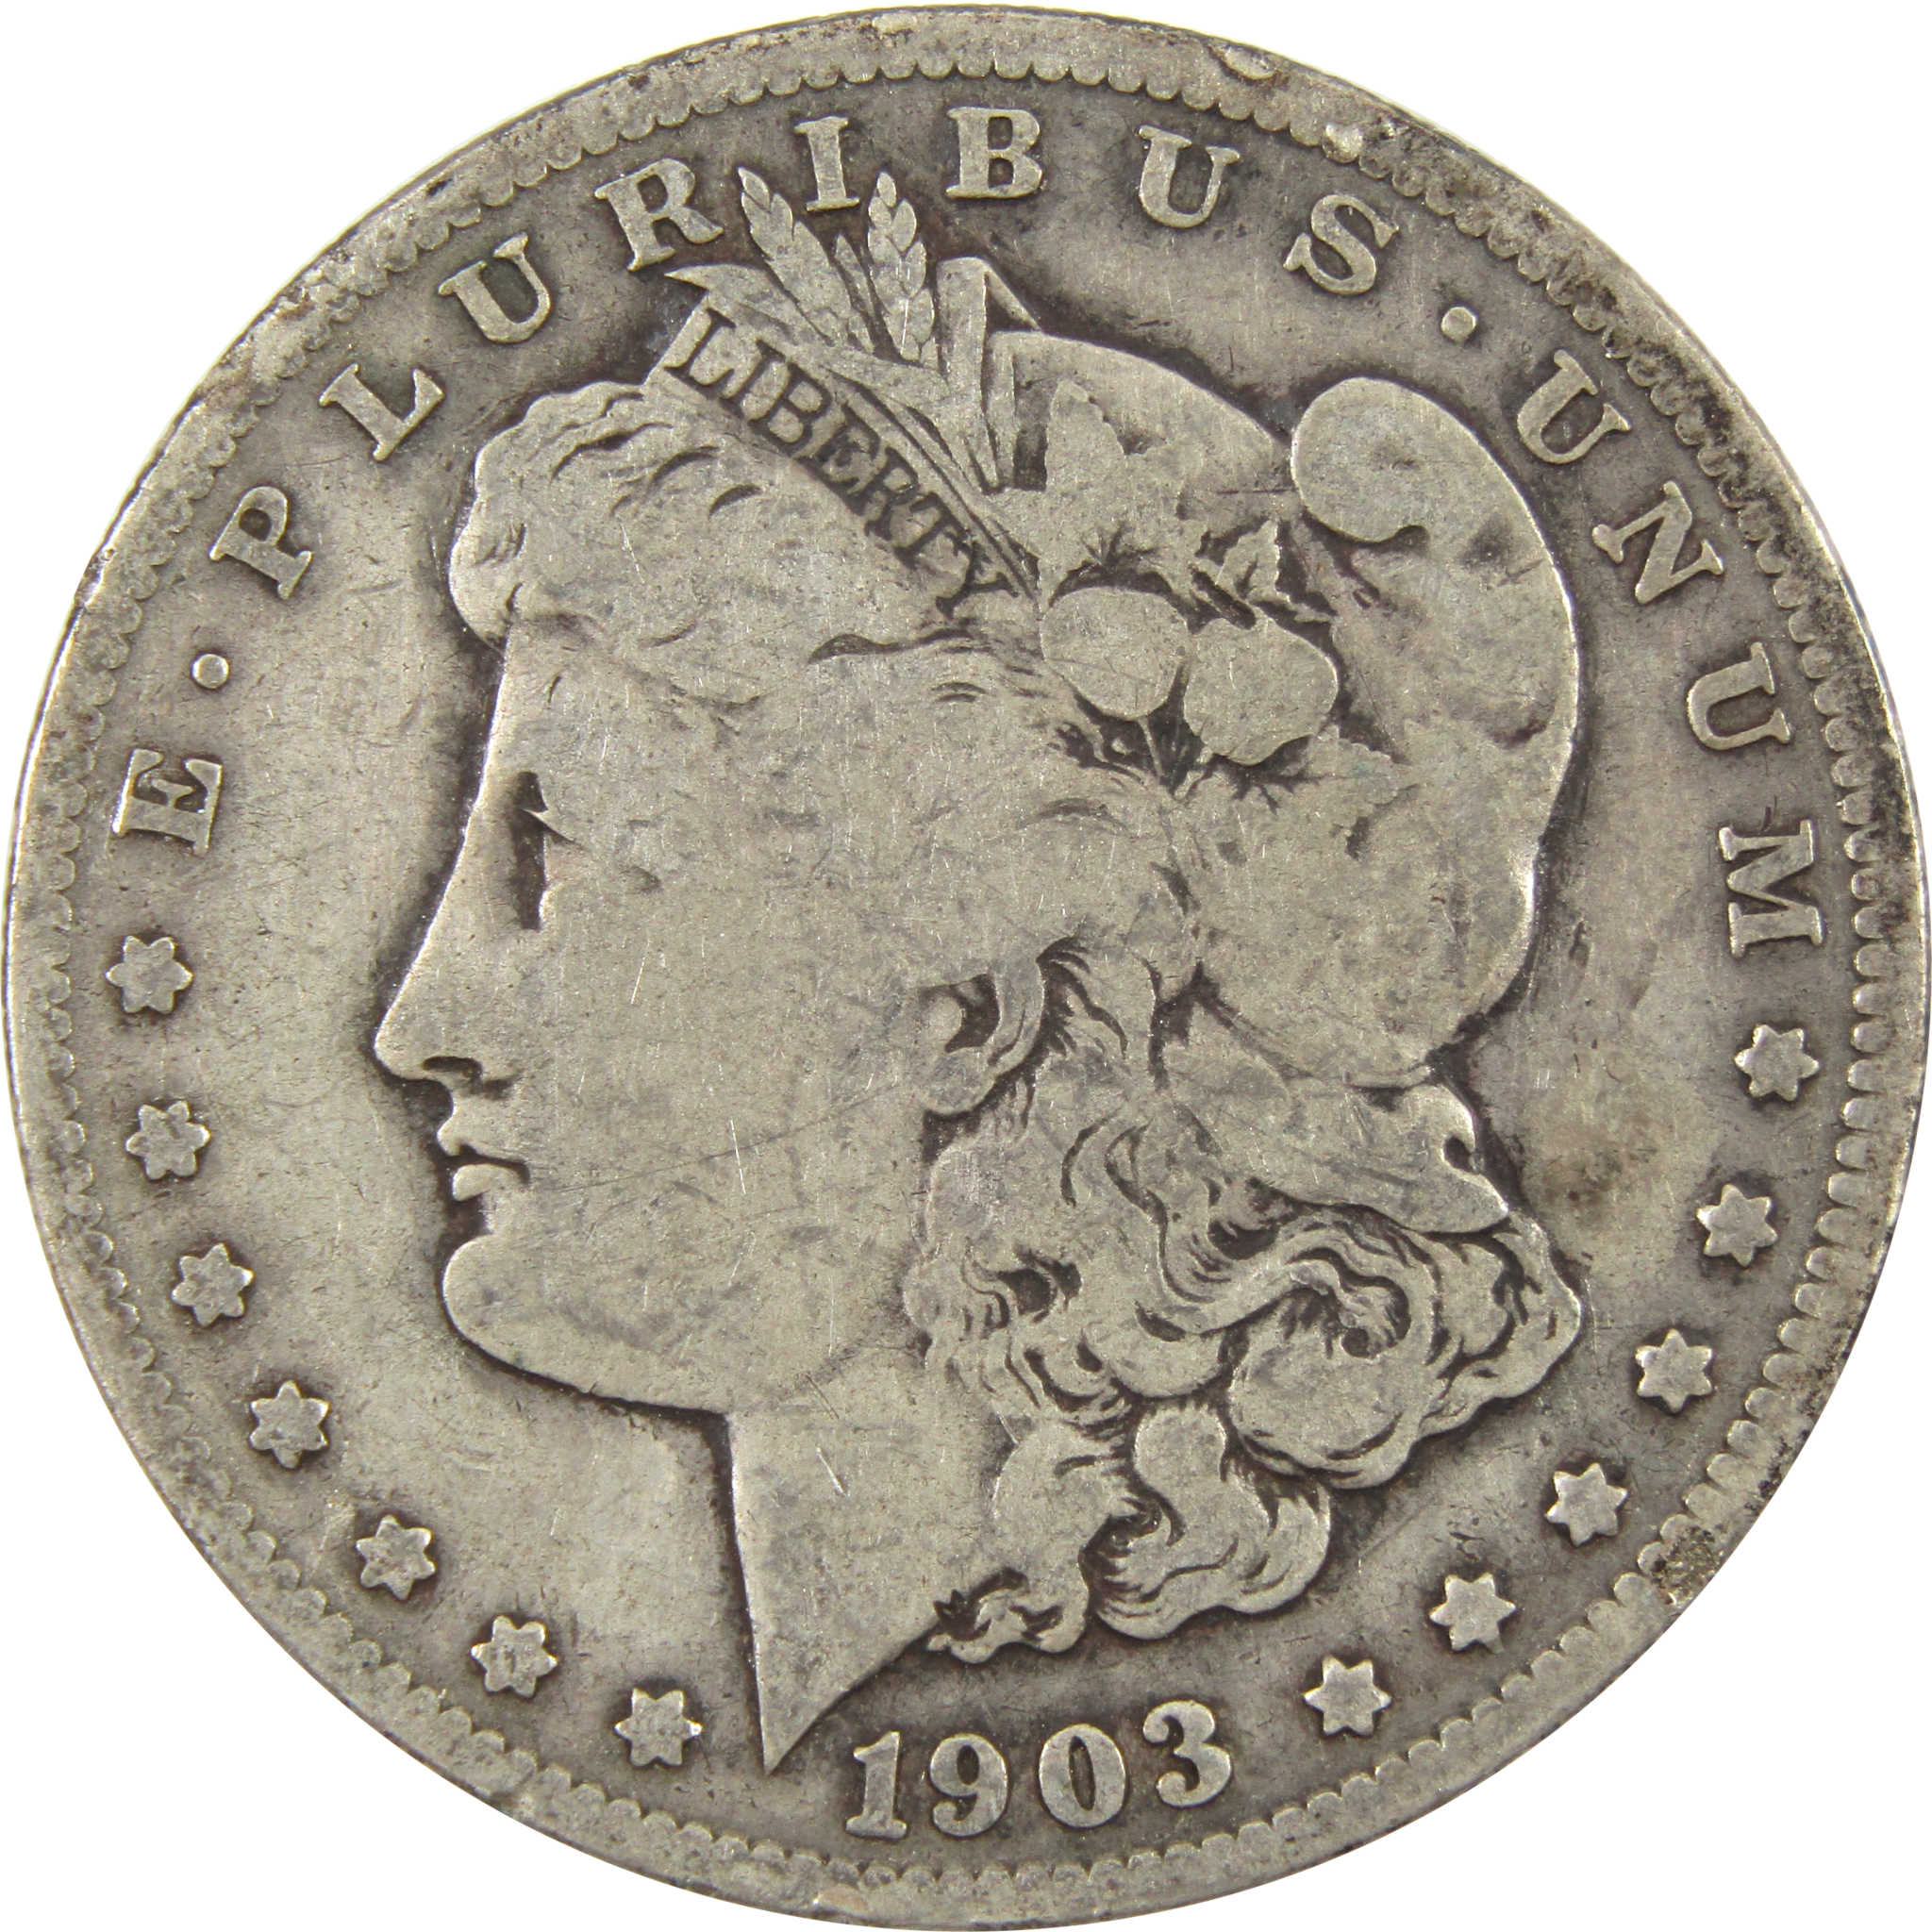 1903 S Morgan Dollar VG Very Good 90% Silver $1 Coin SKU:I10690 - Morgan coin - Morgan silver dollar - Morgan silver dollar for sale - Profile Coins &amp; Collectibles